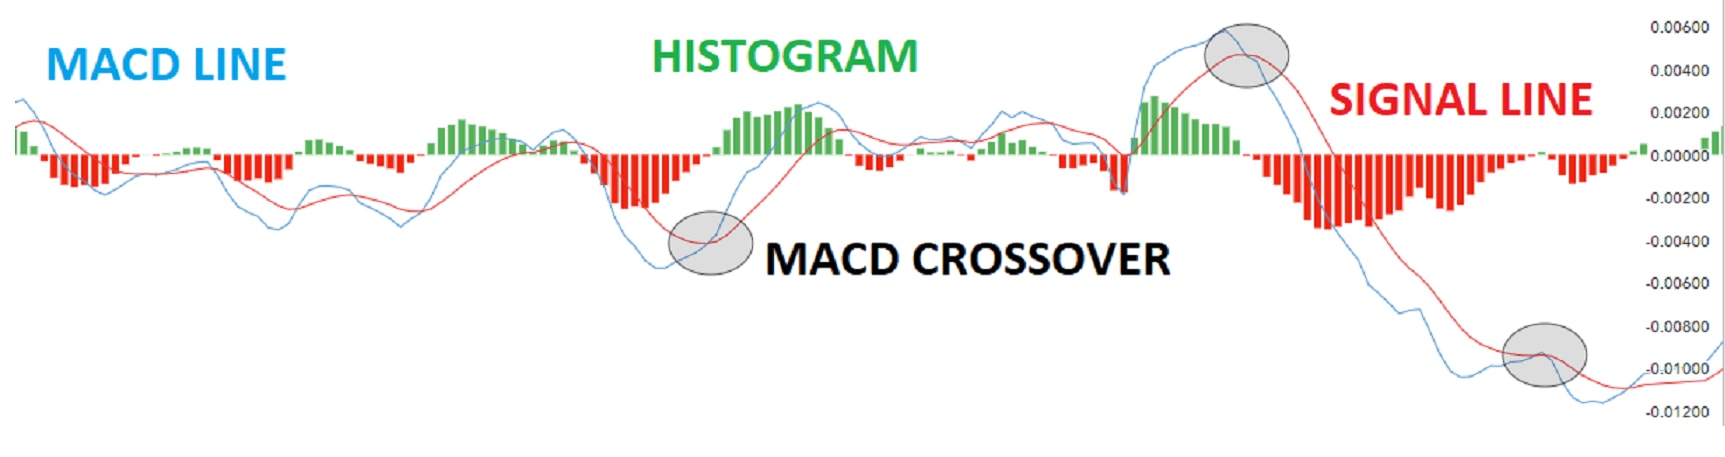 MACD اندیکاتور تحلیل تکنیکال ترید قیمت معامله ارزهای دیجیتال نوسان بازار مکدی واگرایی همگرایی میانگین متحرک